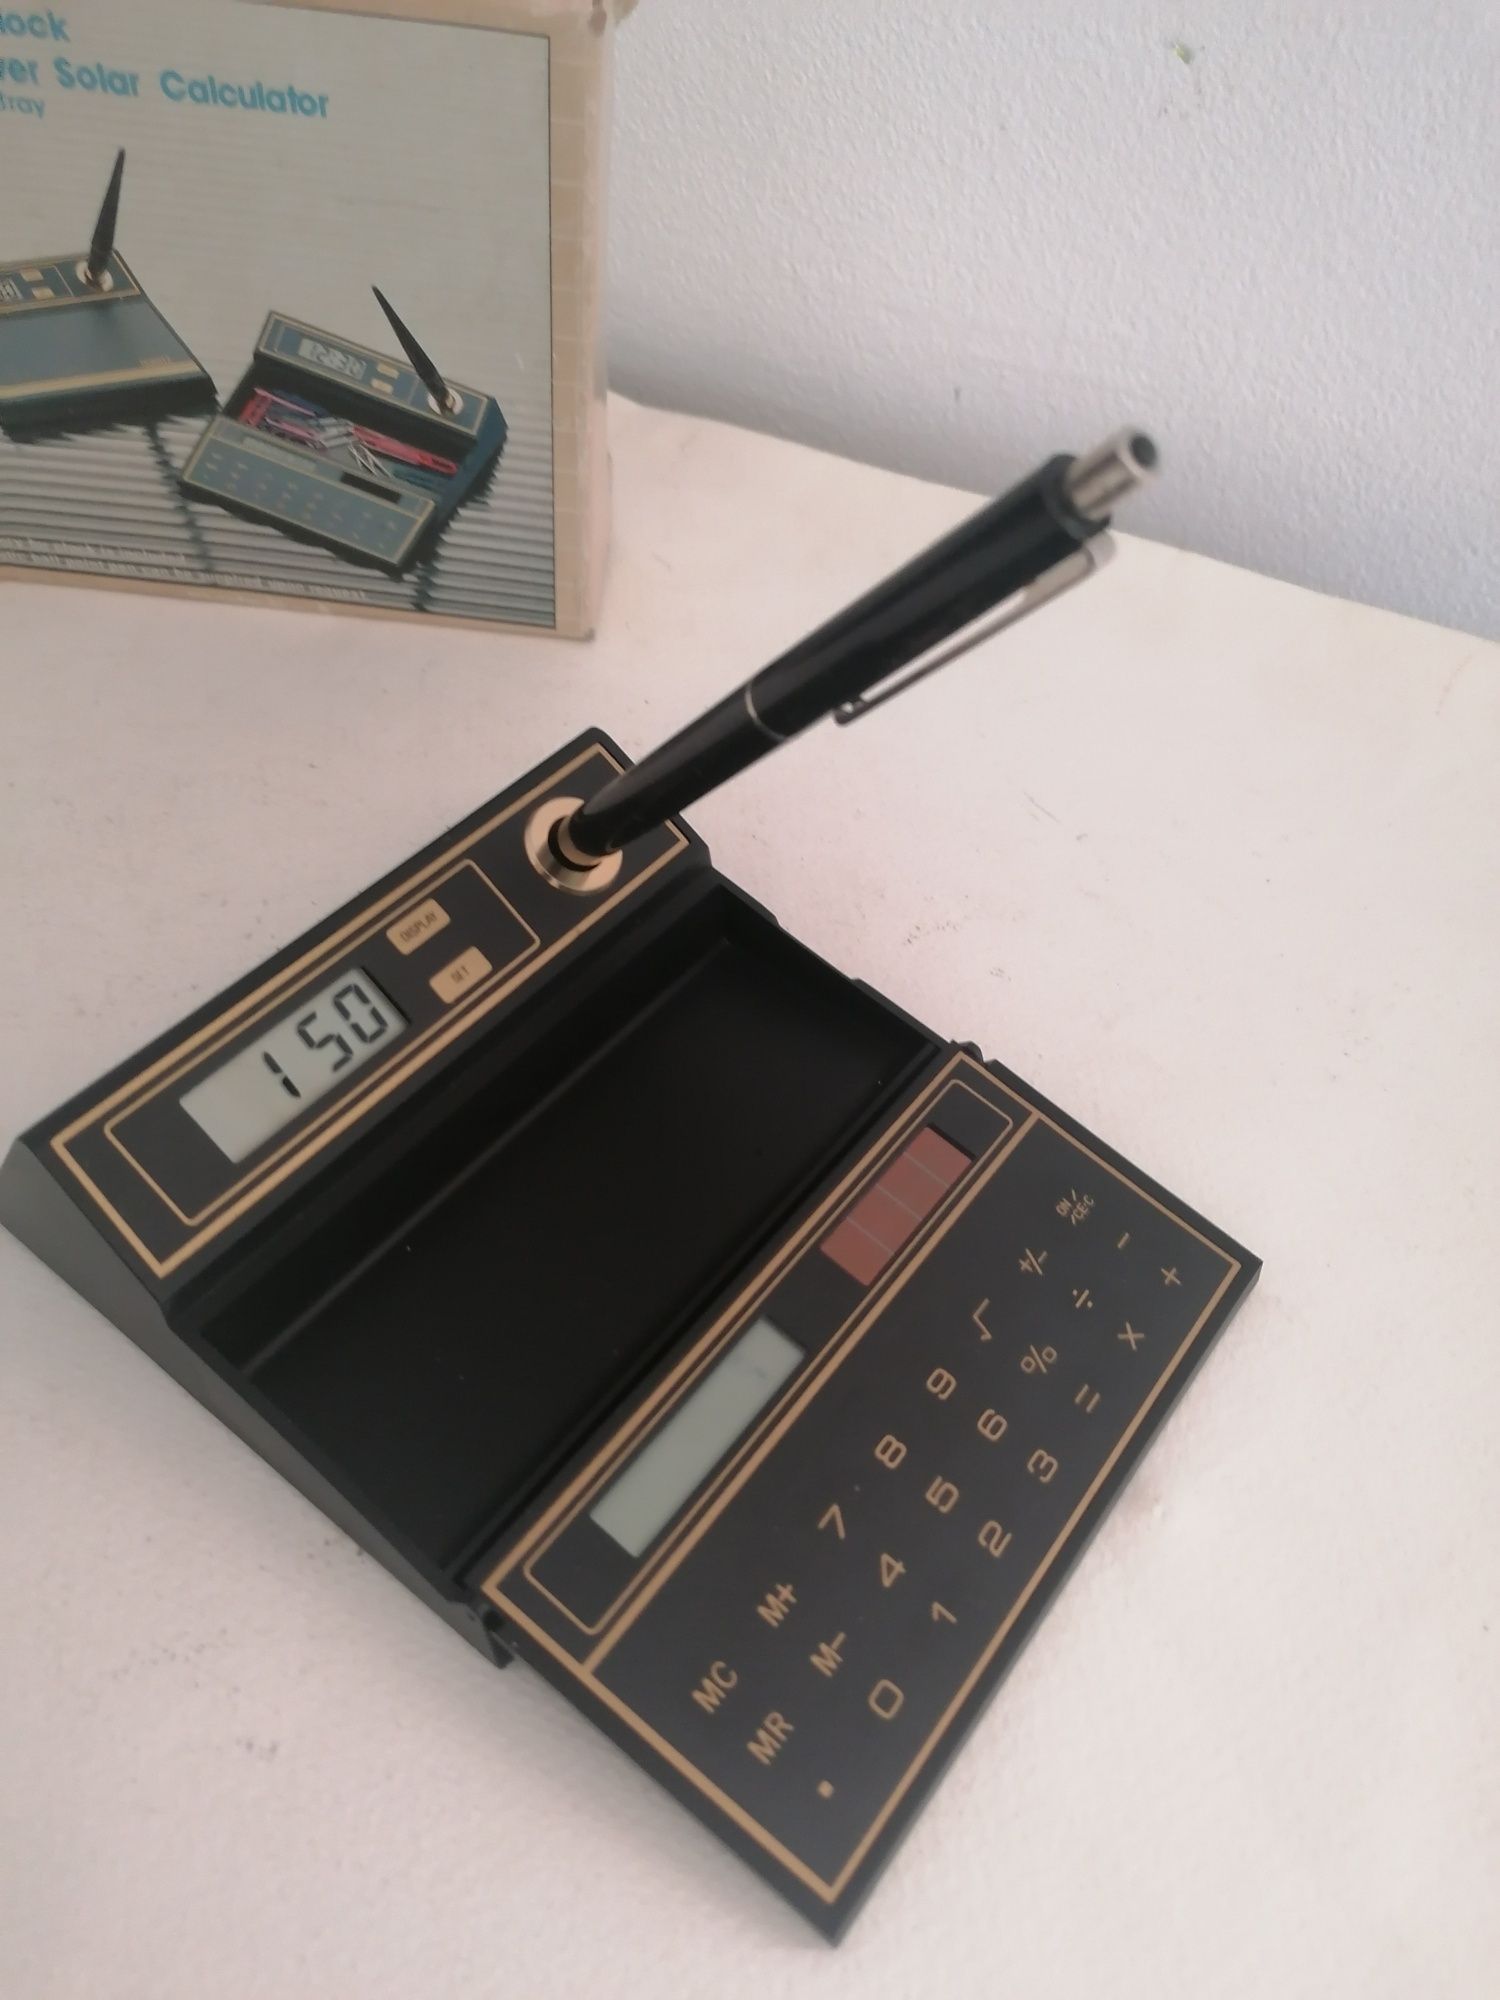 Stand pix ceas, calculator vintage